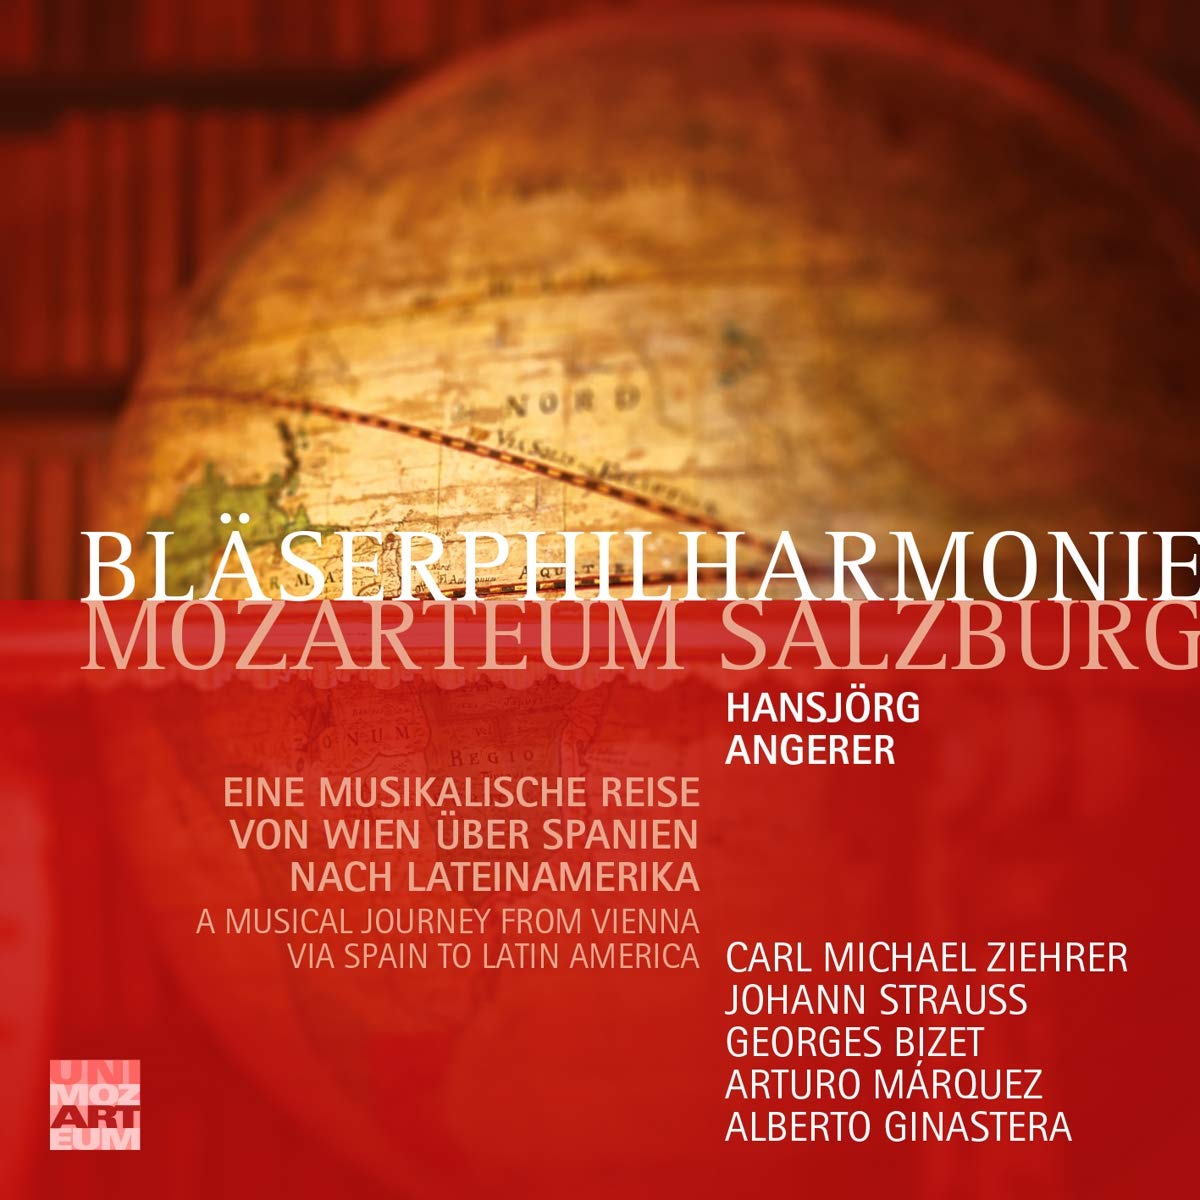 Audio Cd Blaserphilharmonie Mozarteum: Eine Musikalische Reise (2 Cd) NUOVO SIGILLATO, EDIZIONE DEL 10/02/2021 SUBITO DISPONIBILE